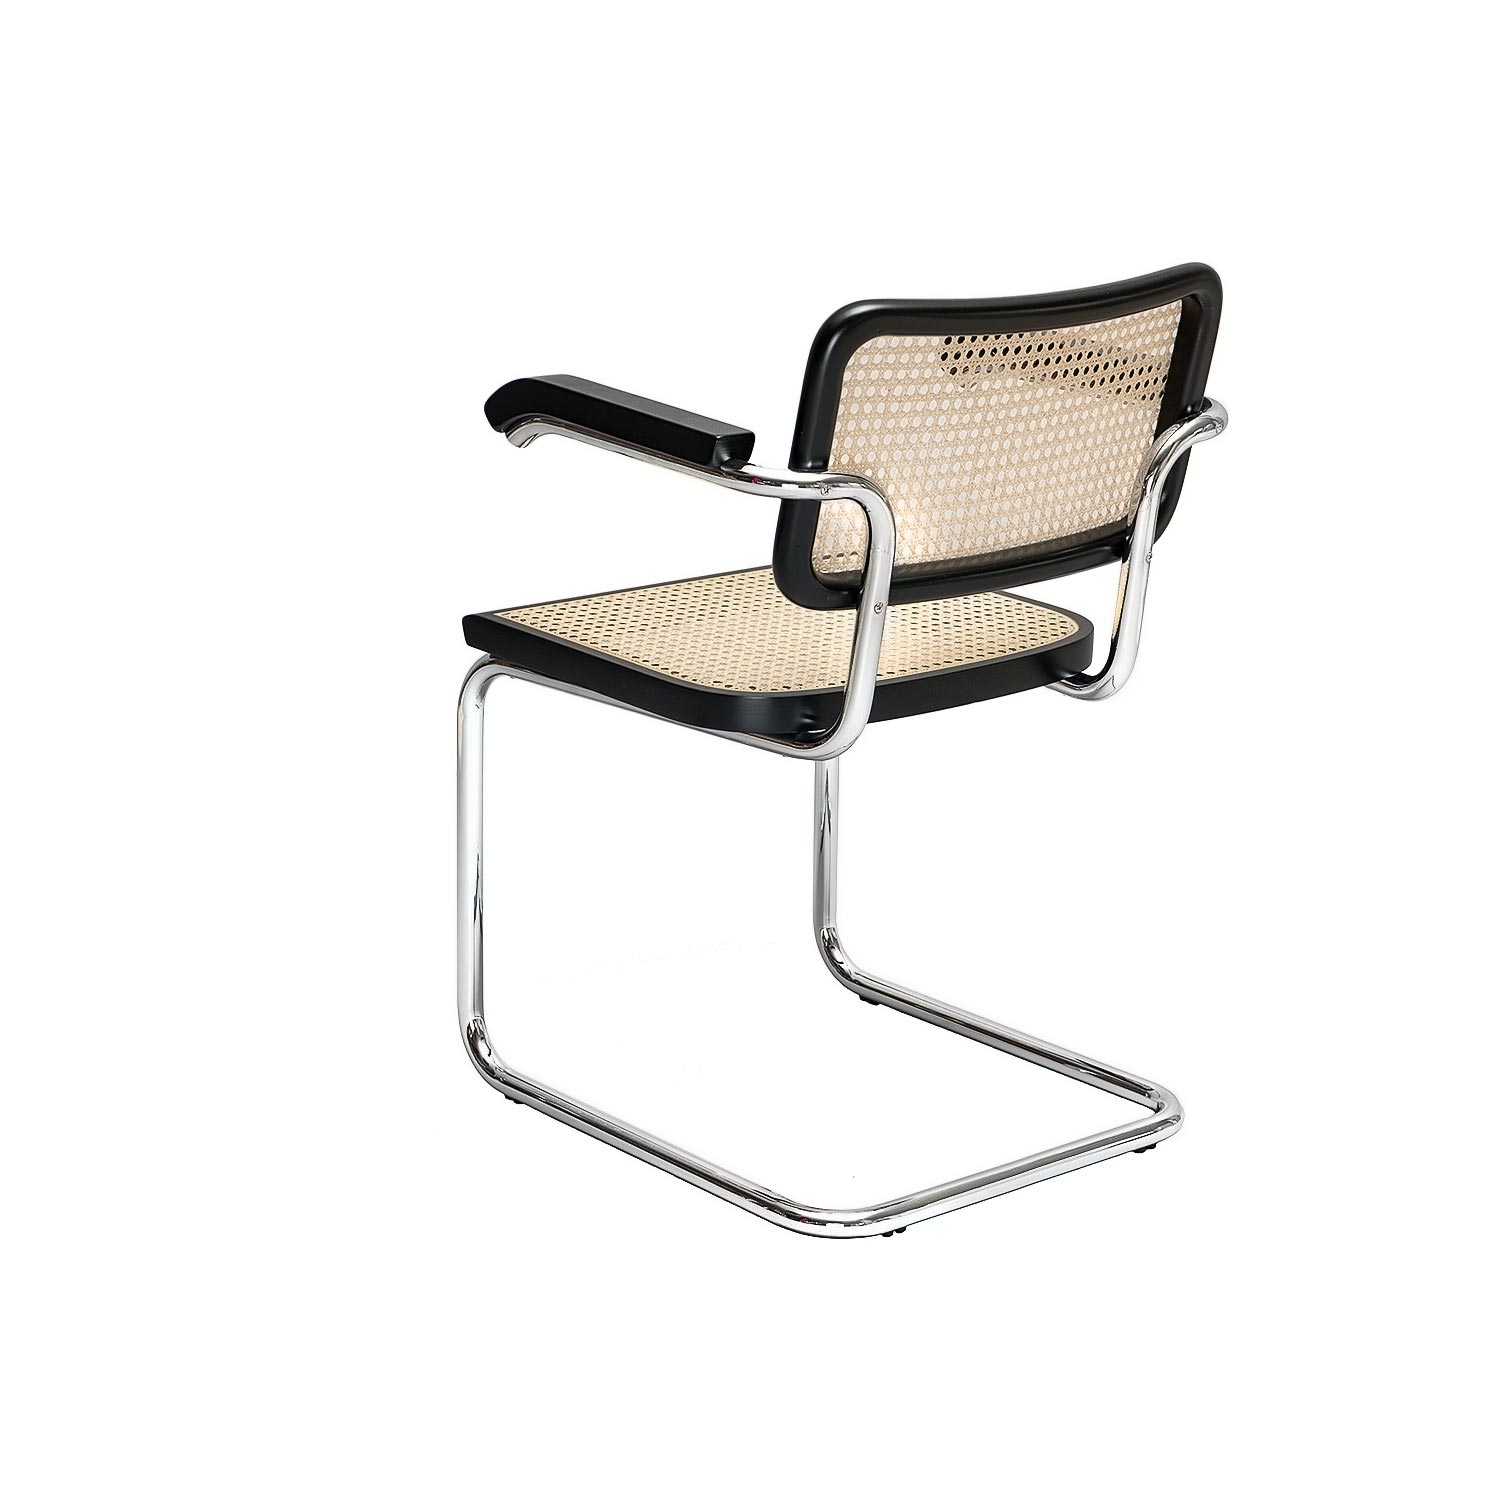 Cesca Chair B 64 designed by Marcel Breuer | steelform design classics